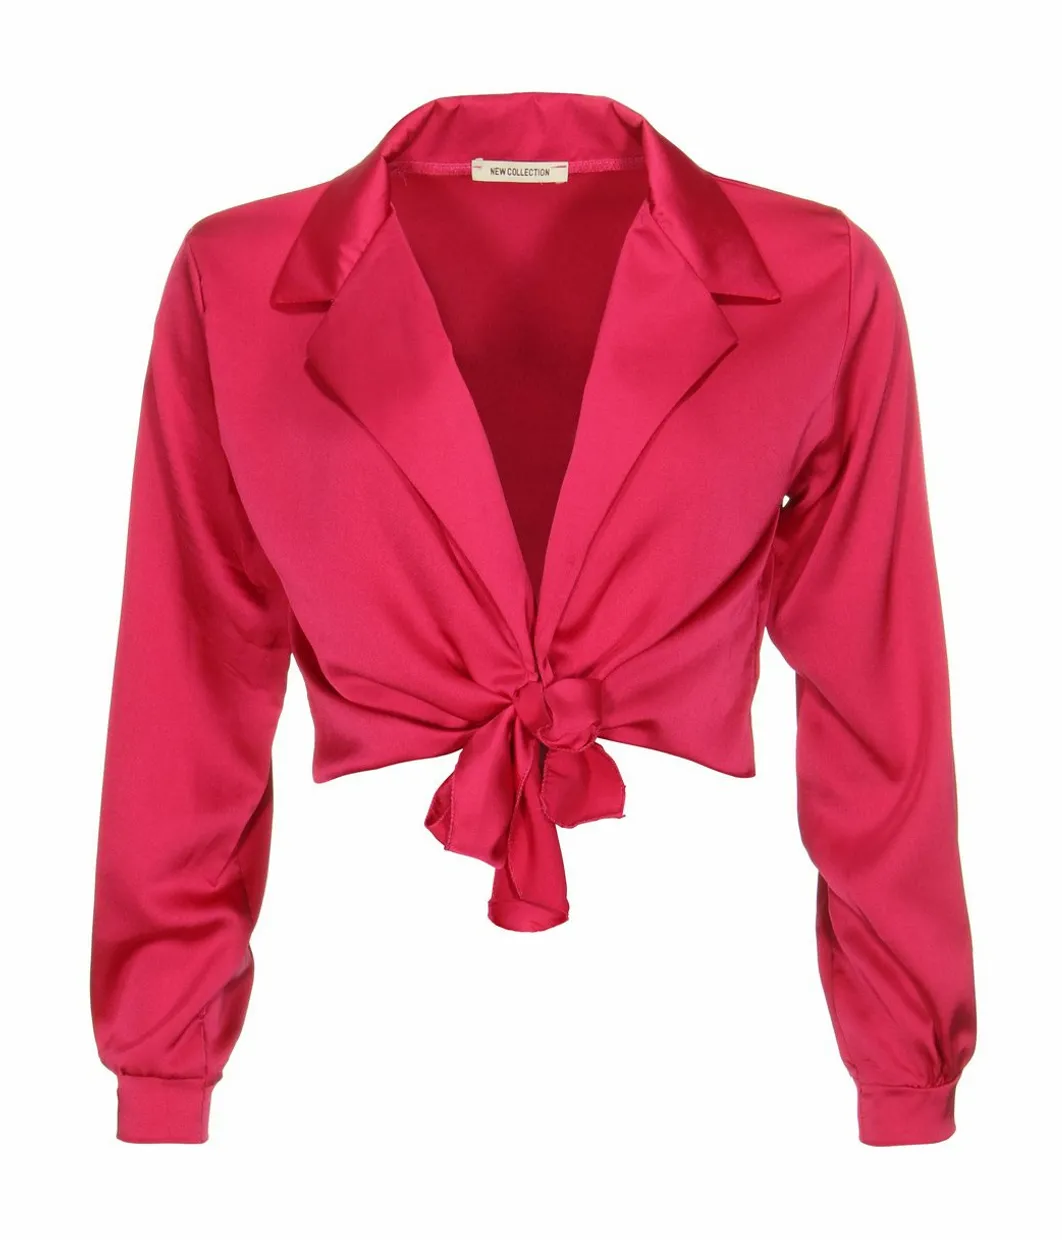 Satin wrap blouse hot pink